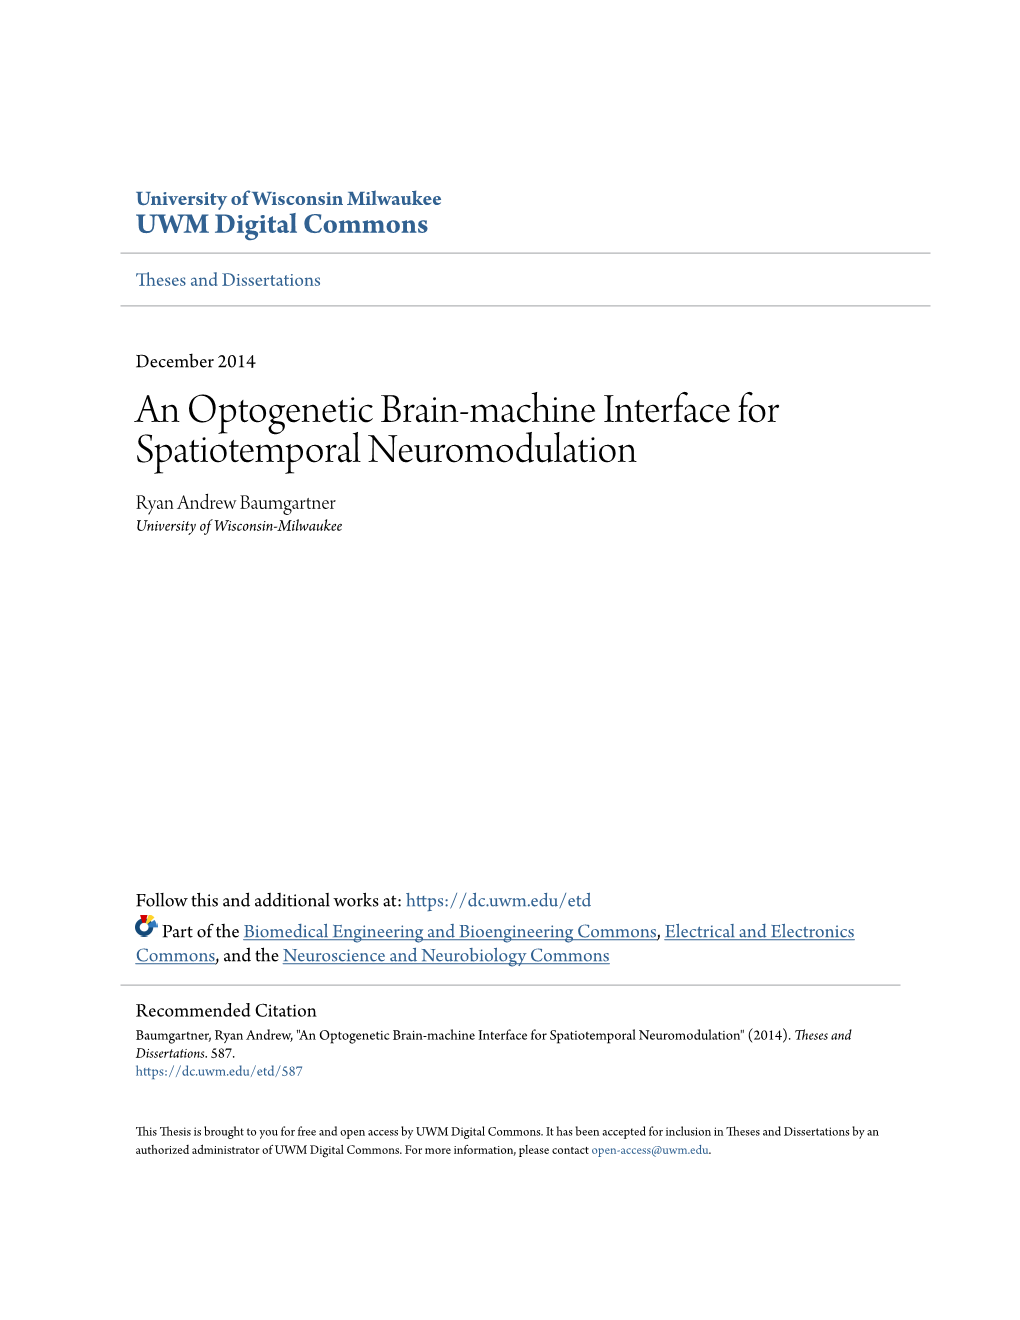 An Optogenetic Brain-Machine Interface for Spatiotemporal Neuromodulation Ryan Andrew Baumgartner University of Wisconsin-Milwaukee